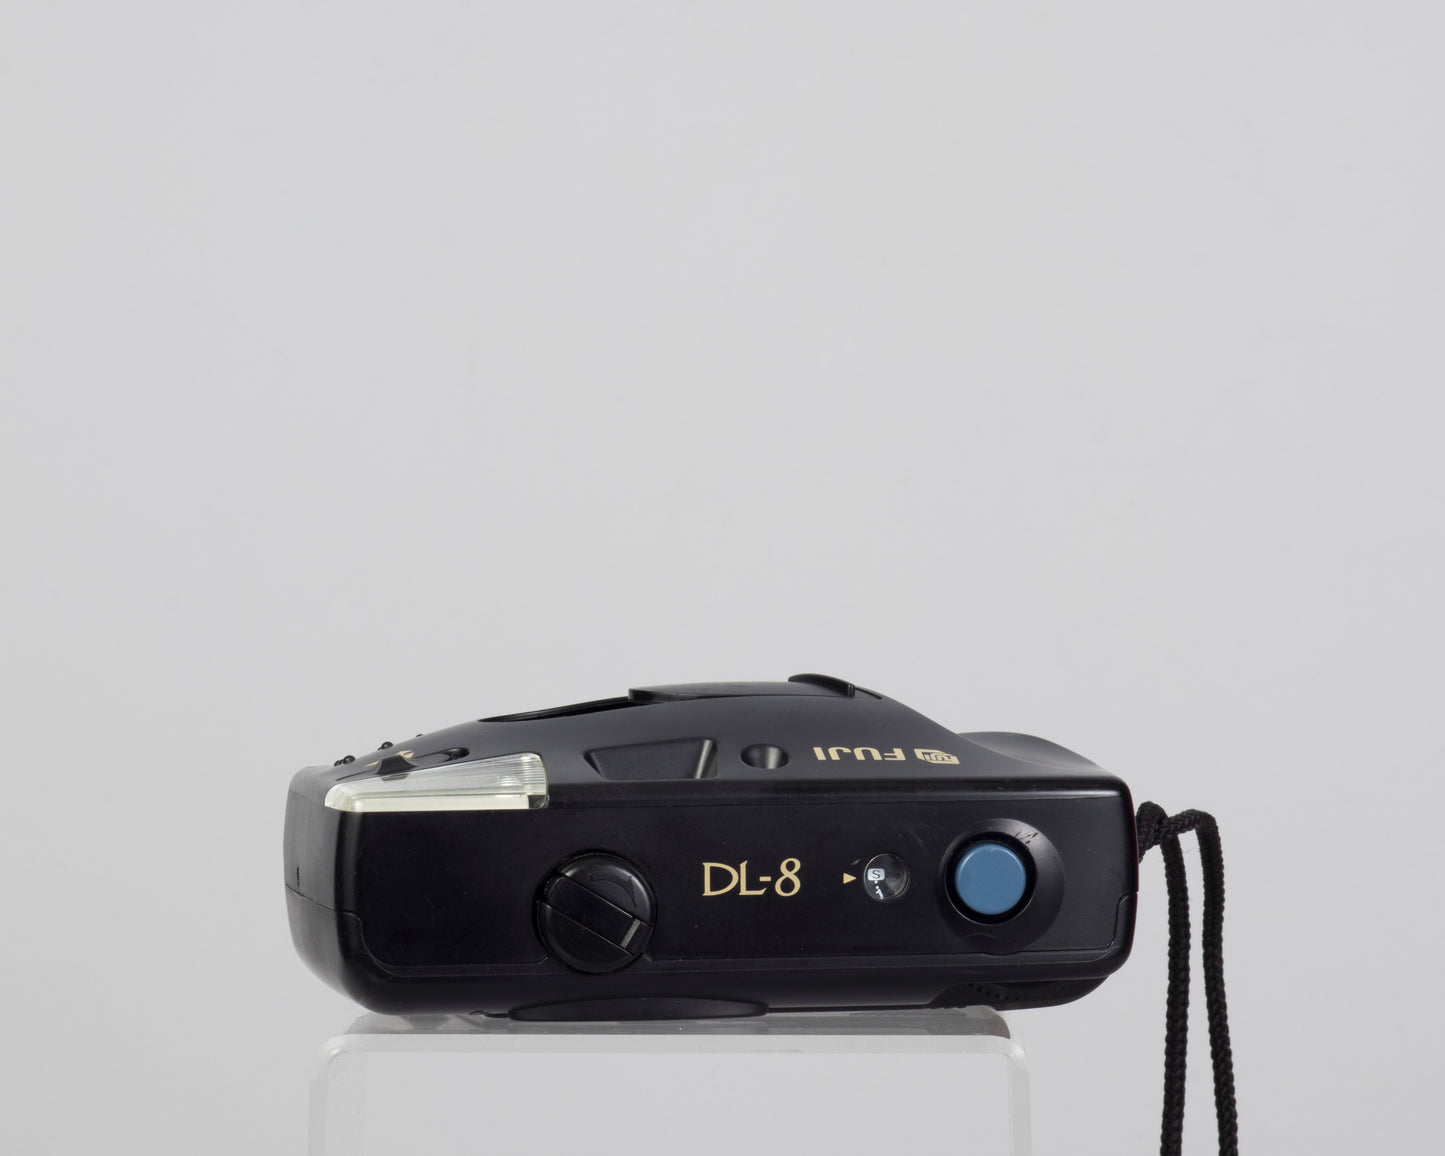 Fuji DL-8 35mm film camera (serial 10402220)